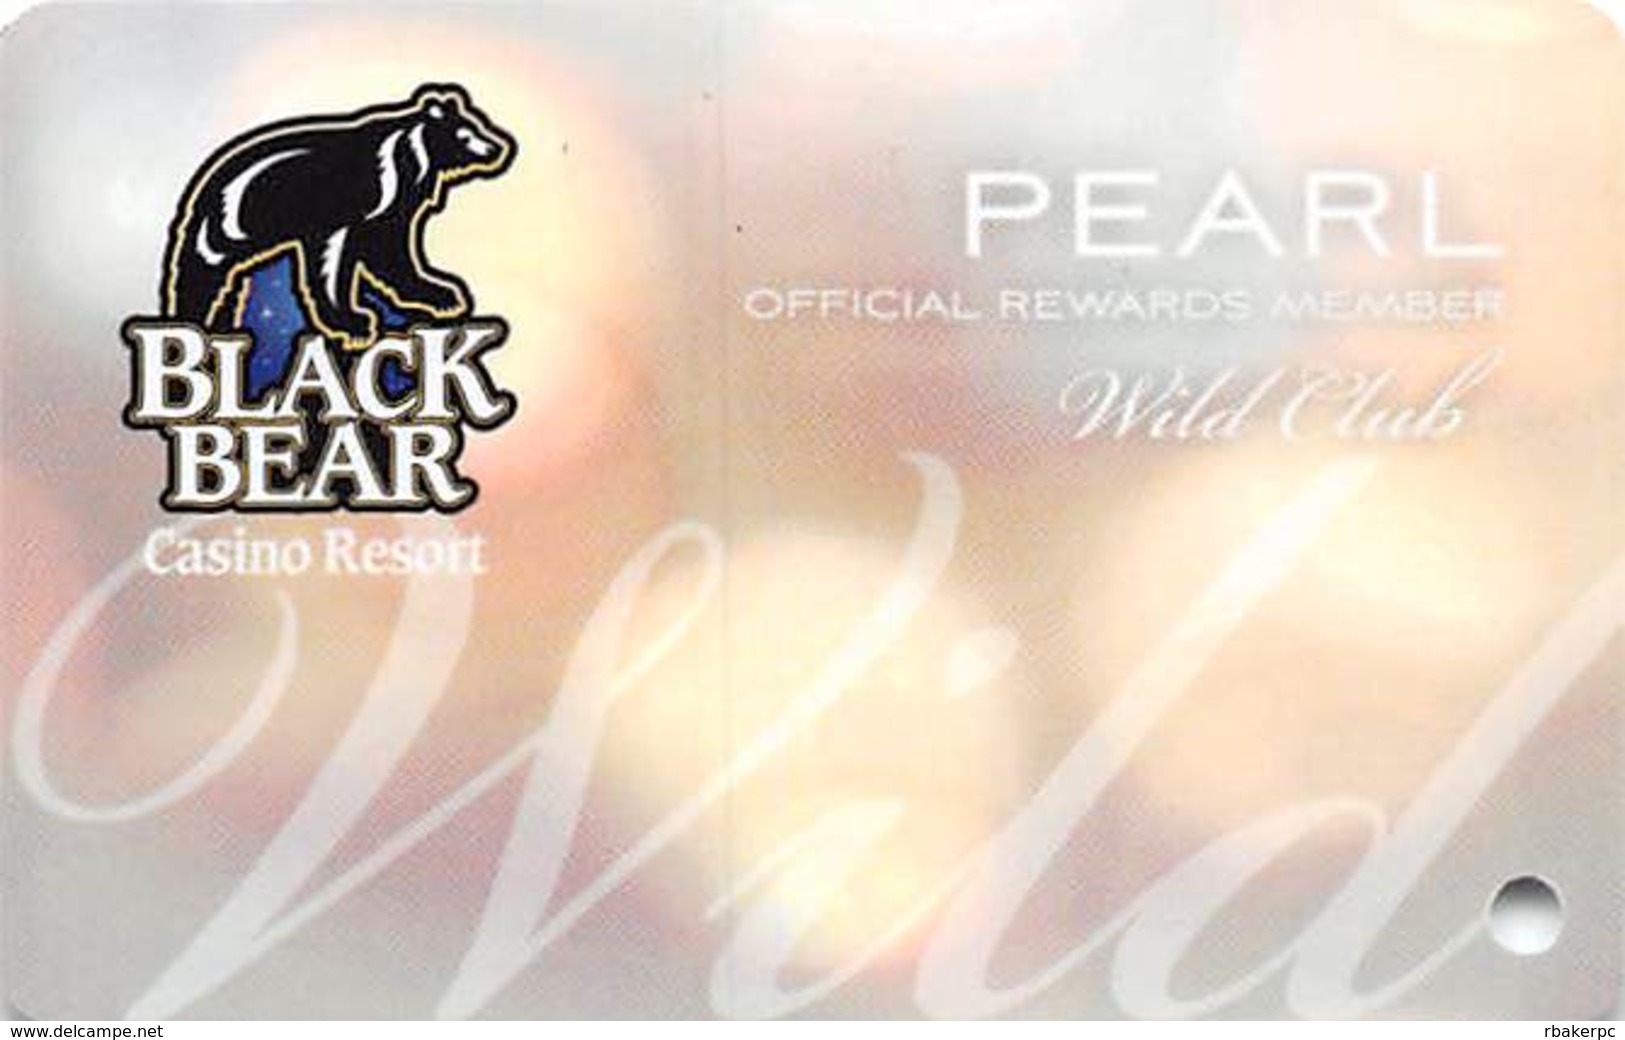 Black Bear Casino - Carlton, MN - BLANK Wild Club Slot Card - Casino Cards